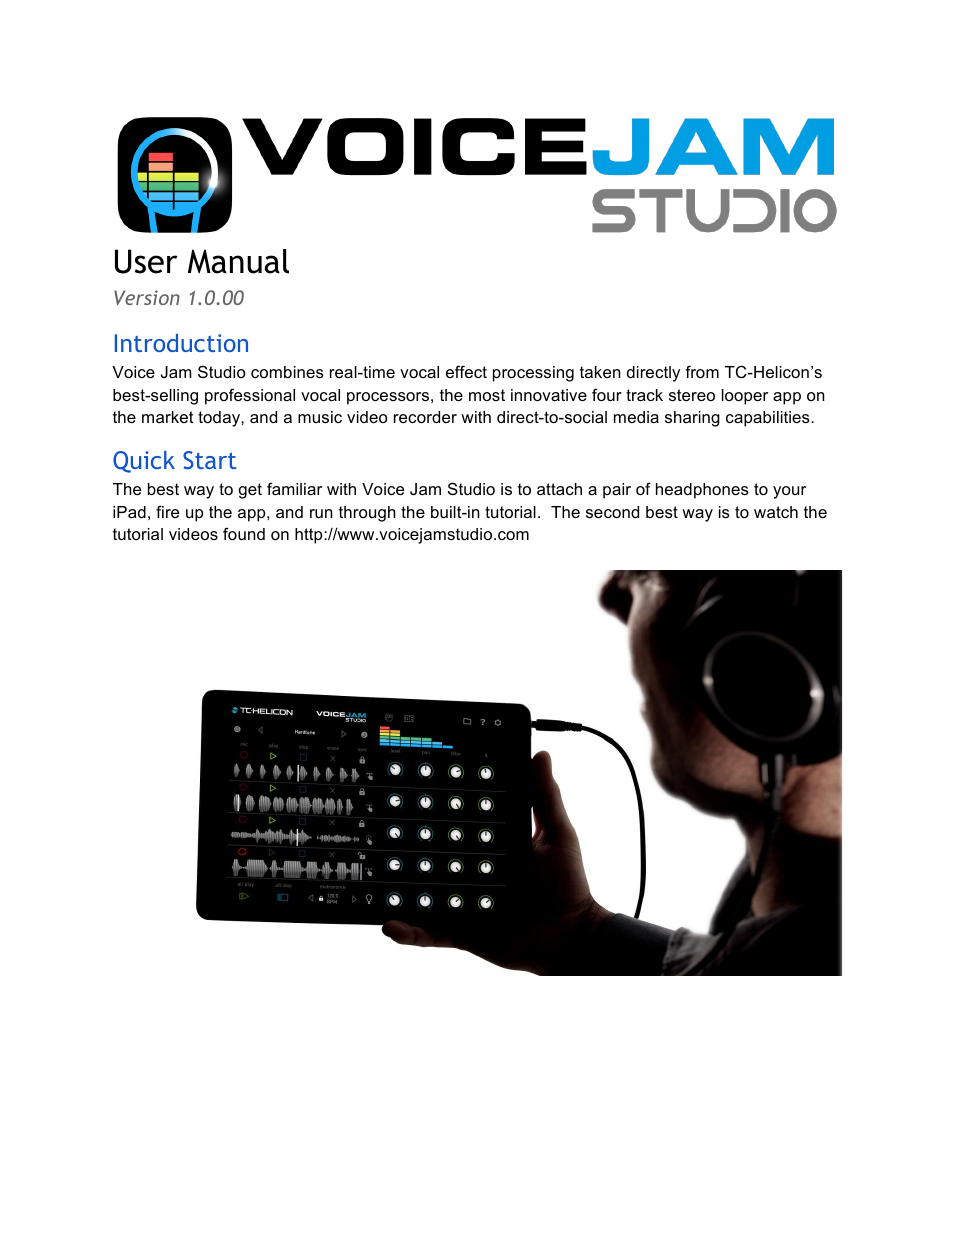 Voice Jam Studio